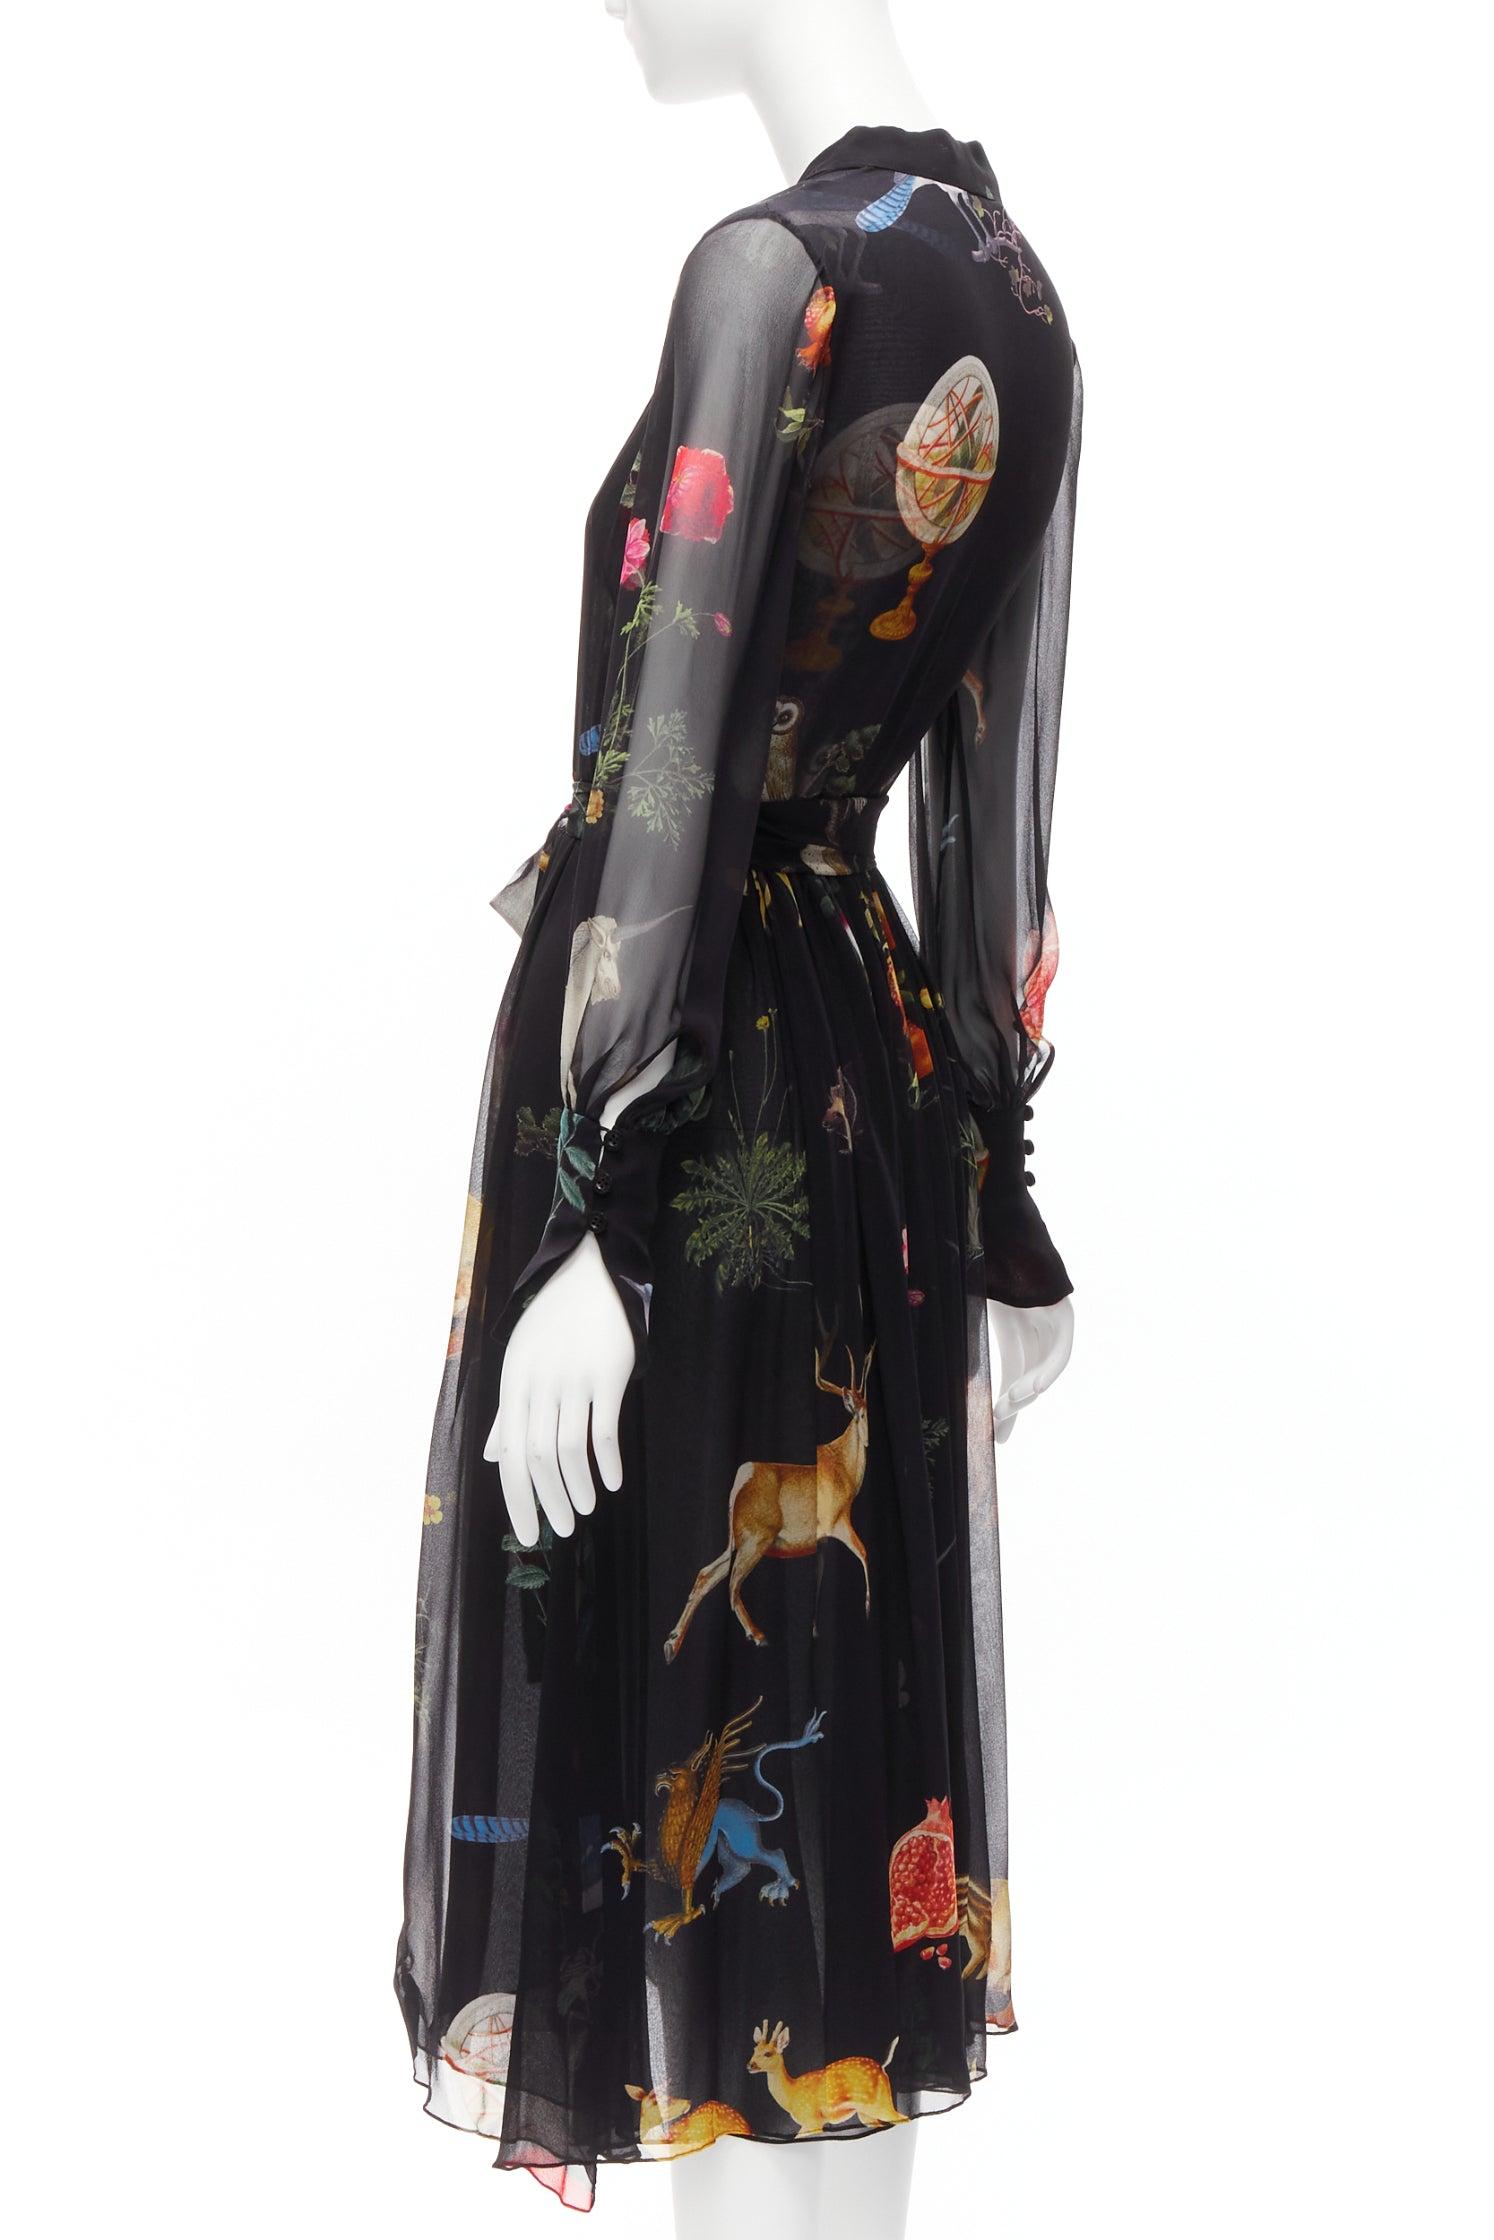 OSCAR DE LA RENTA 2018 Enchanted Forest floral silk dress US0 XS Meghan Markel 3